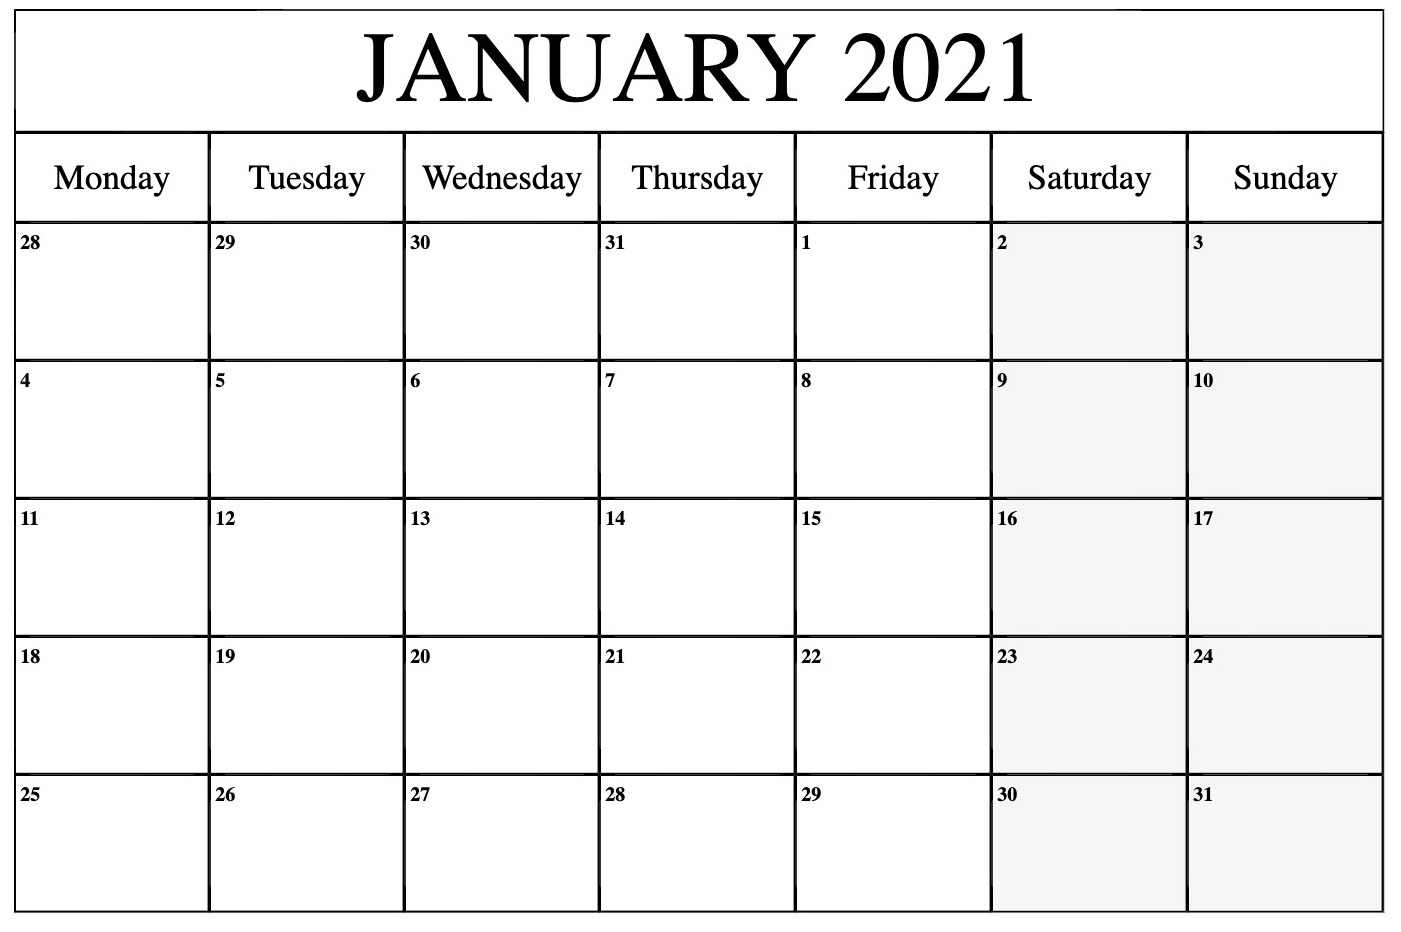 Free January 2021 Printable Calendar Template Calendar Showing December 2020 And January 2021